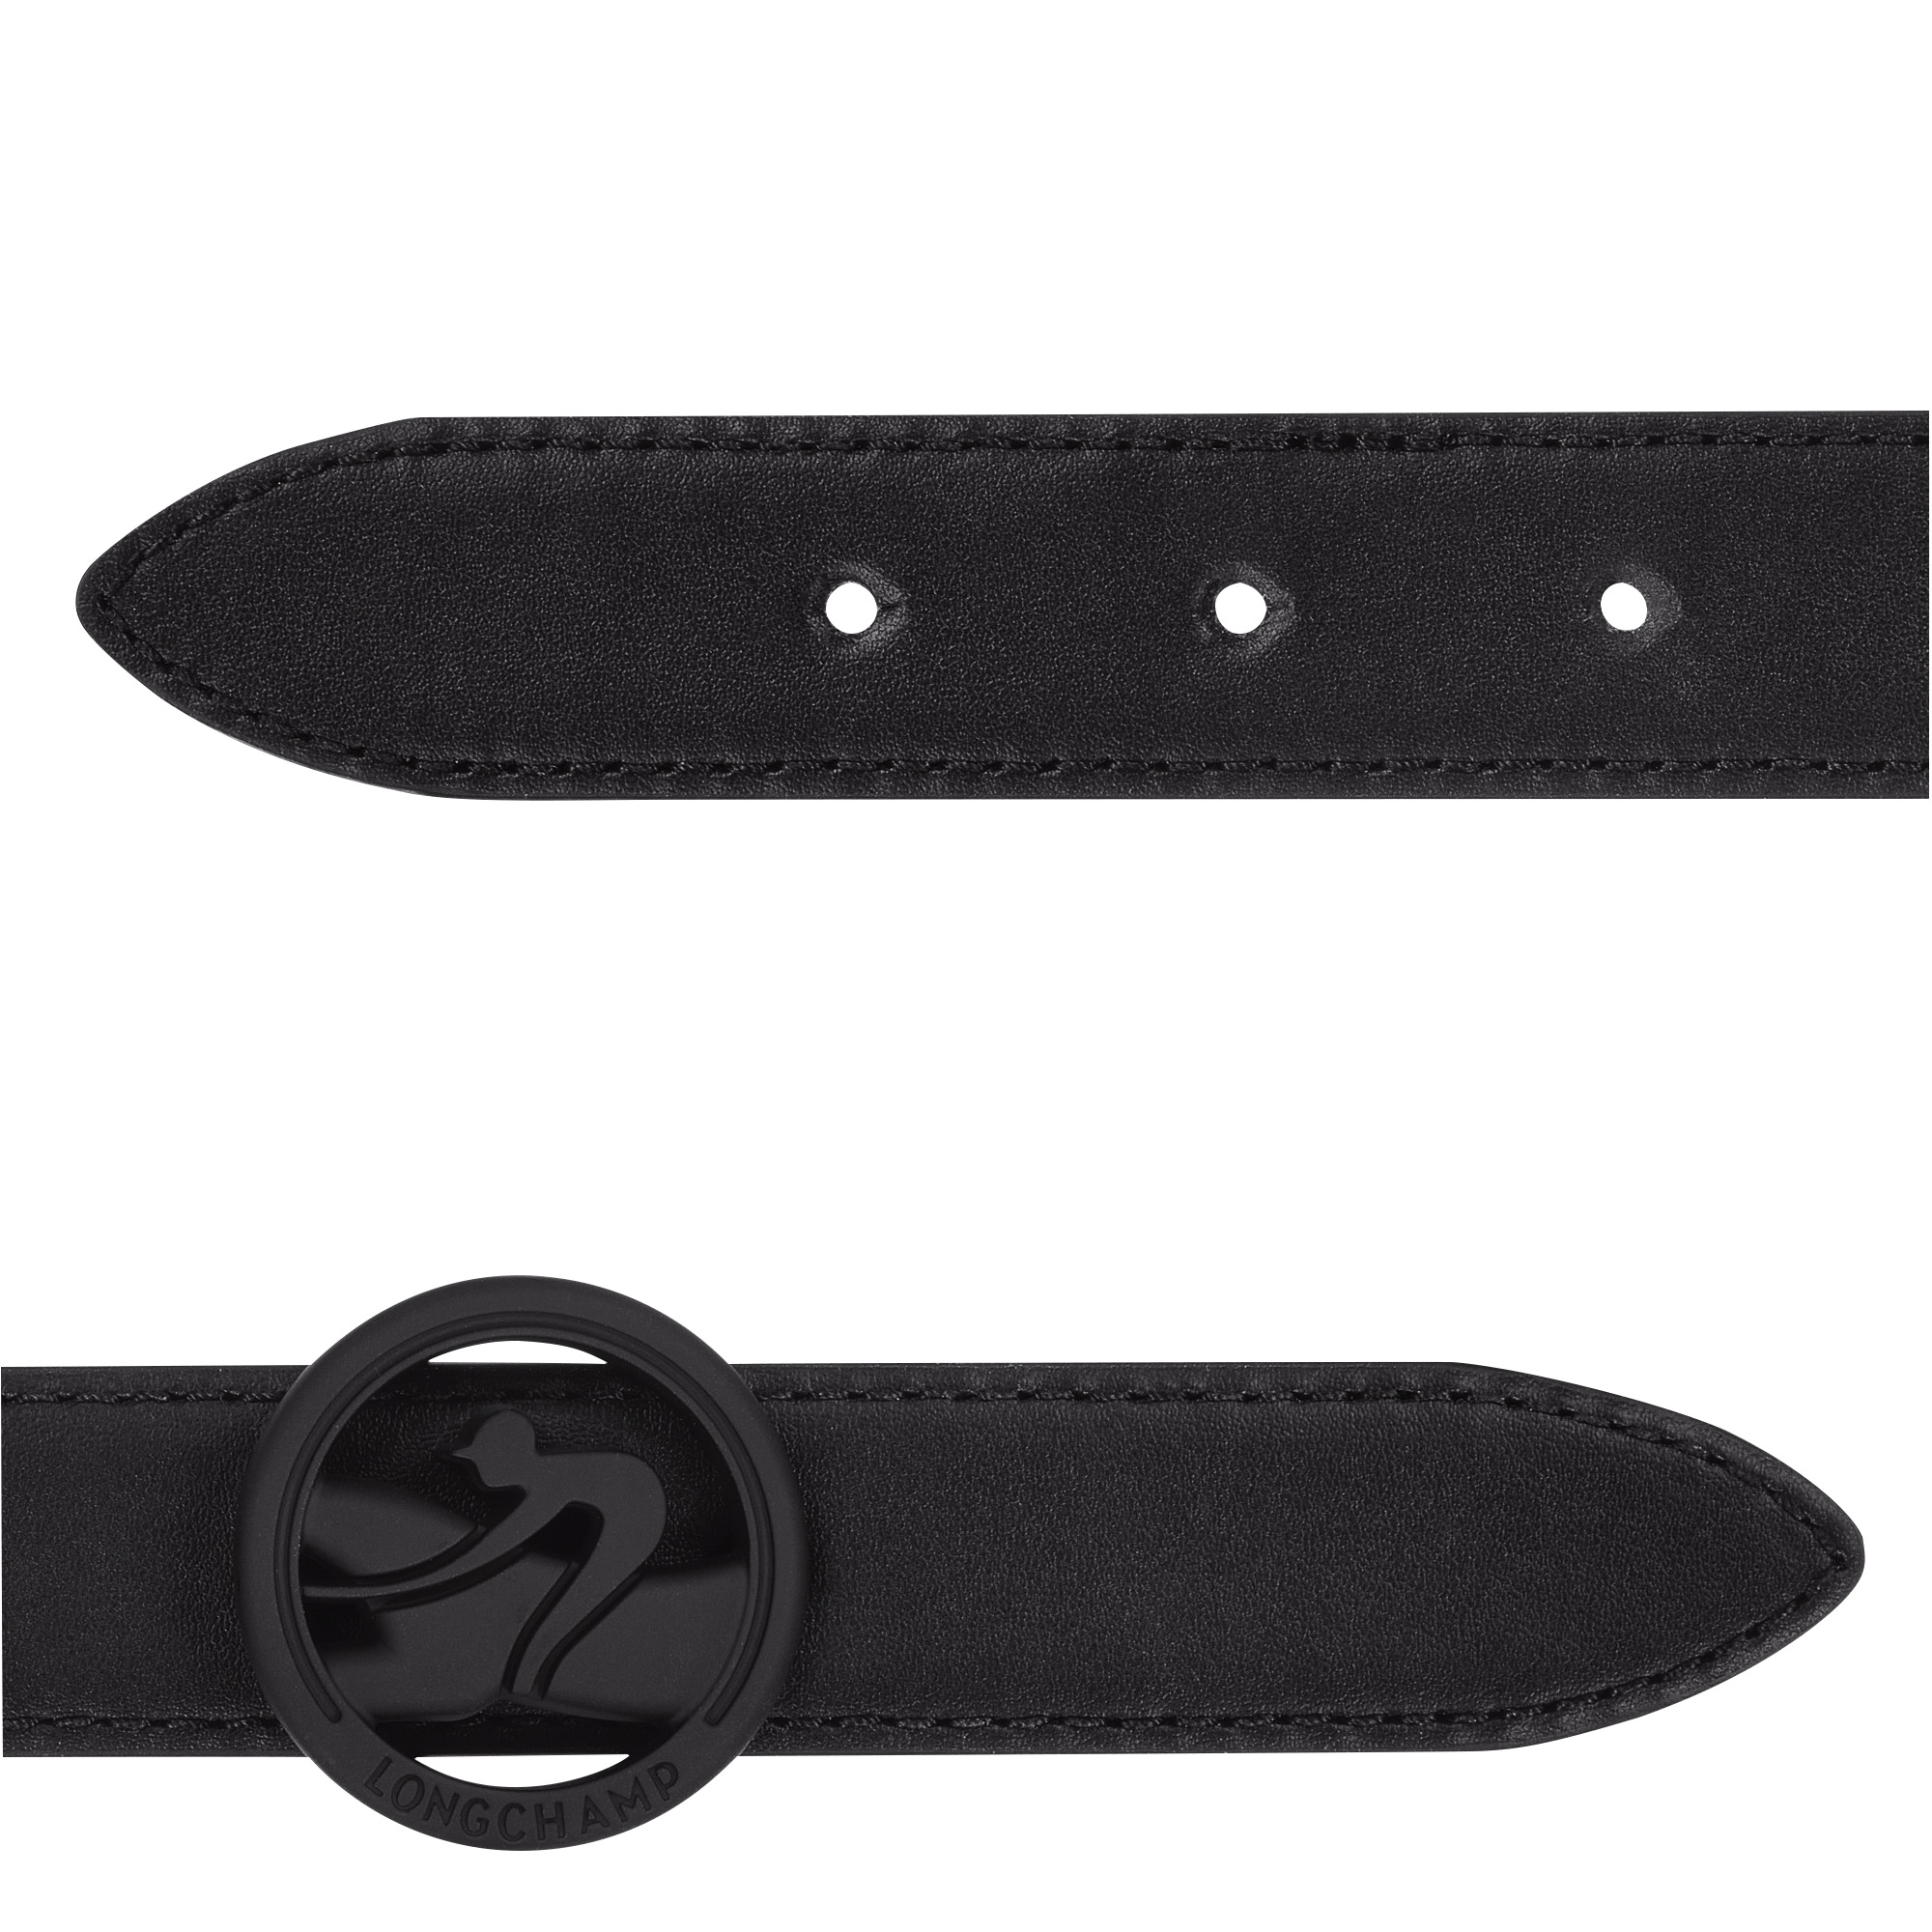 Box-Trot Ladies' belt Black - Leather - 3